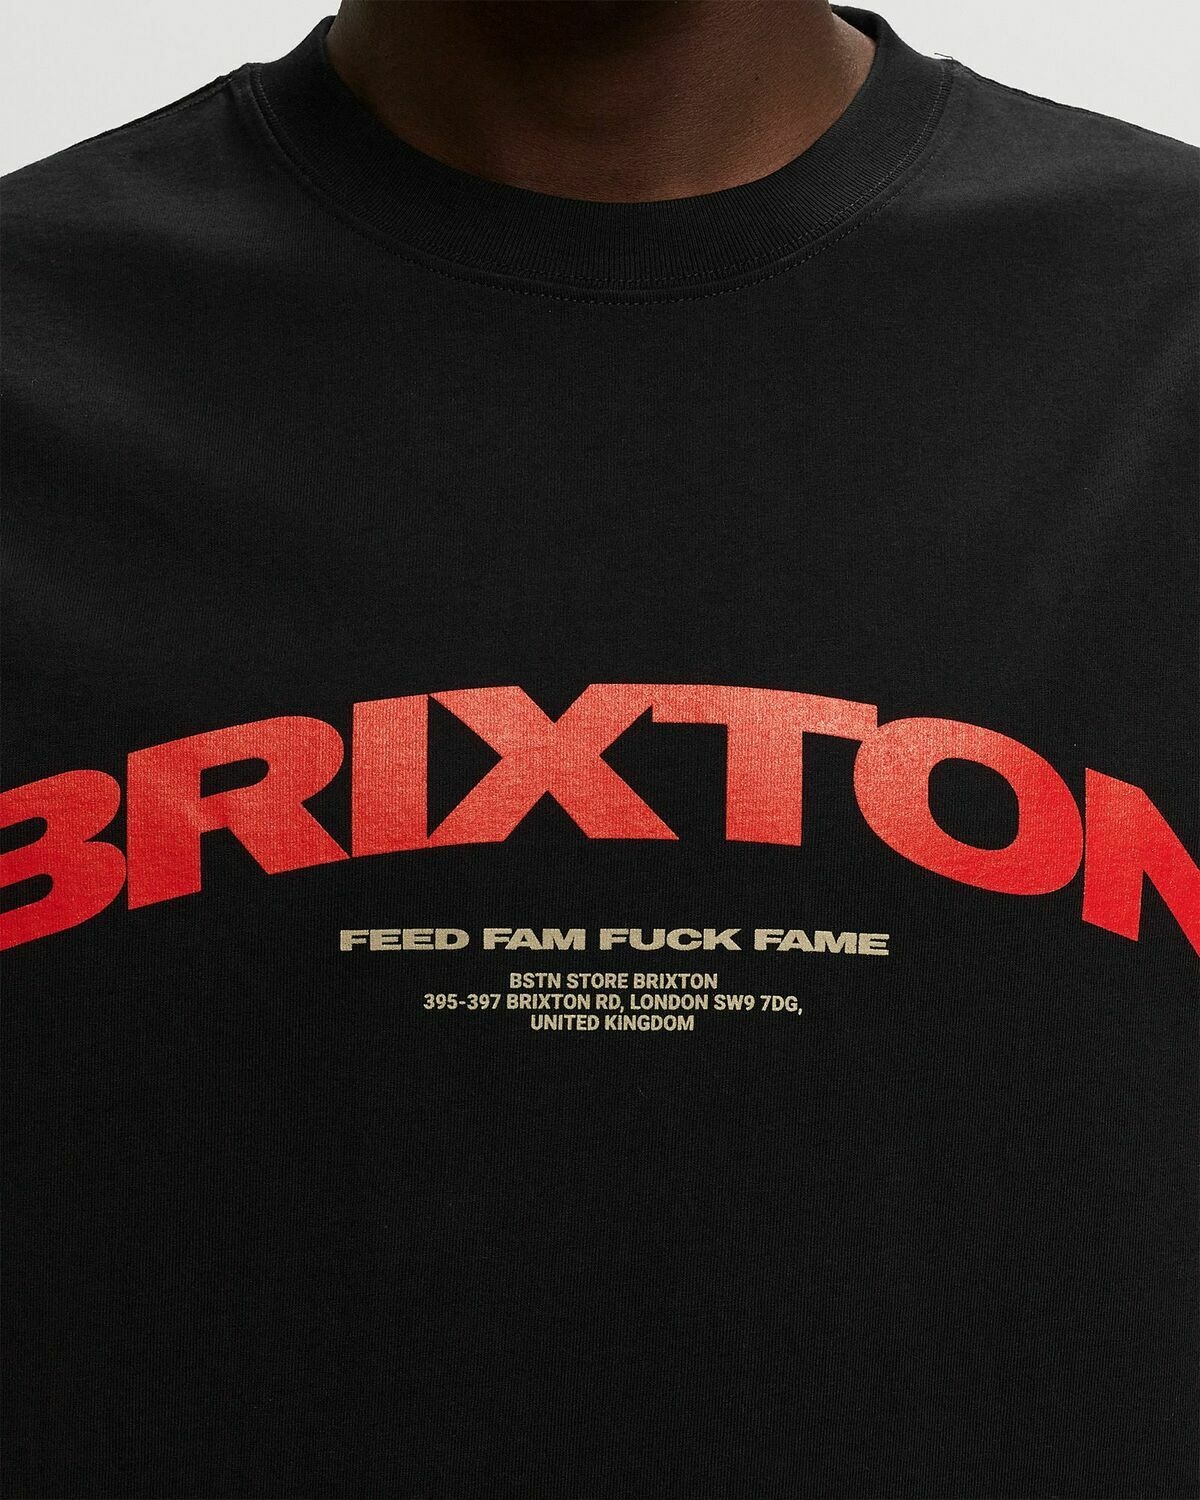 Bstn Brand Brixton Arche Tee Black - Mens - Shortsleeves